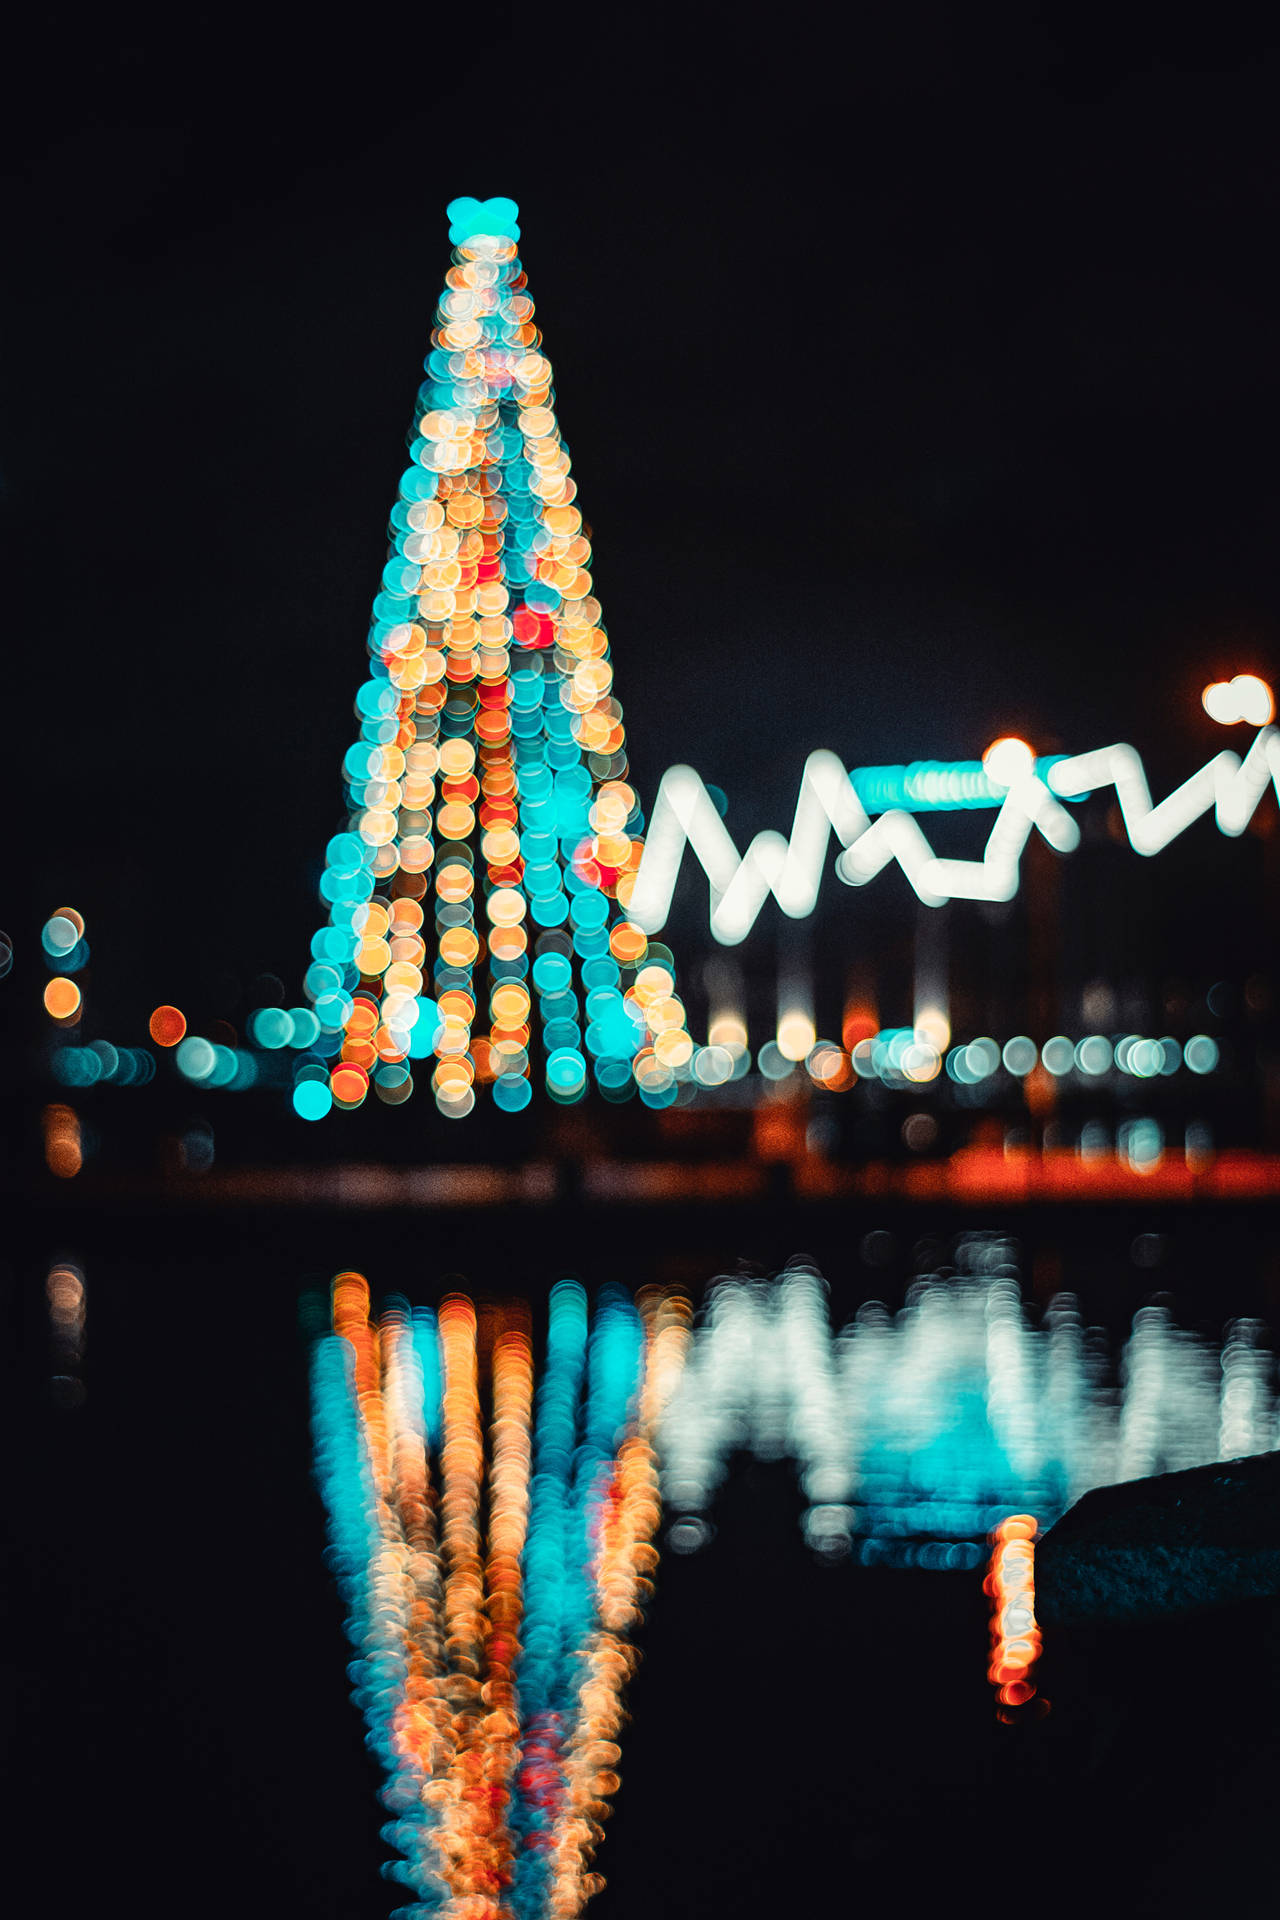 Reflected Christmas lights bring joy to the festive season. Wallpaper